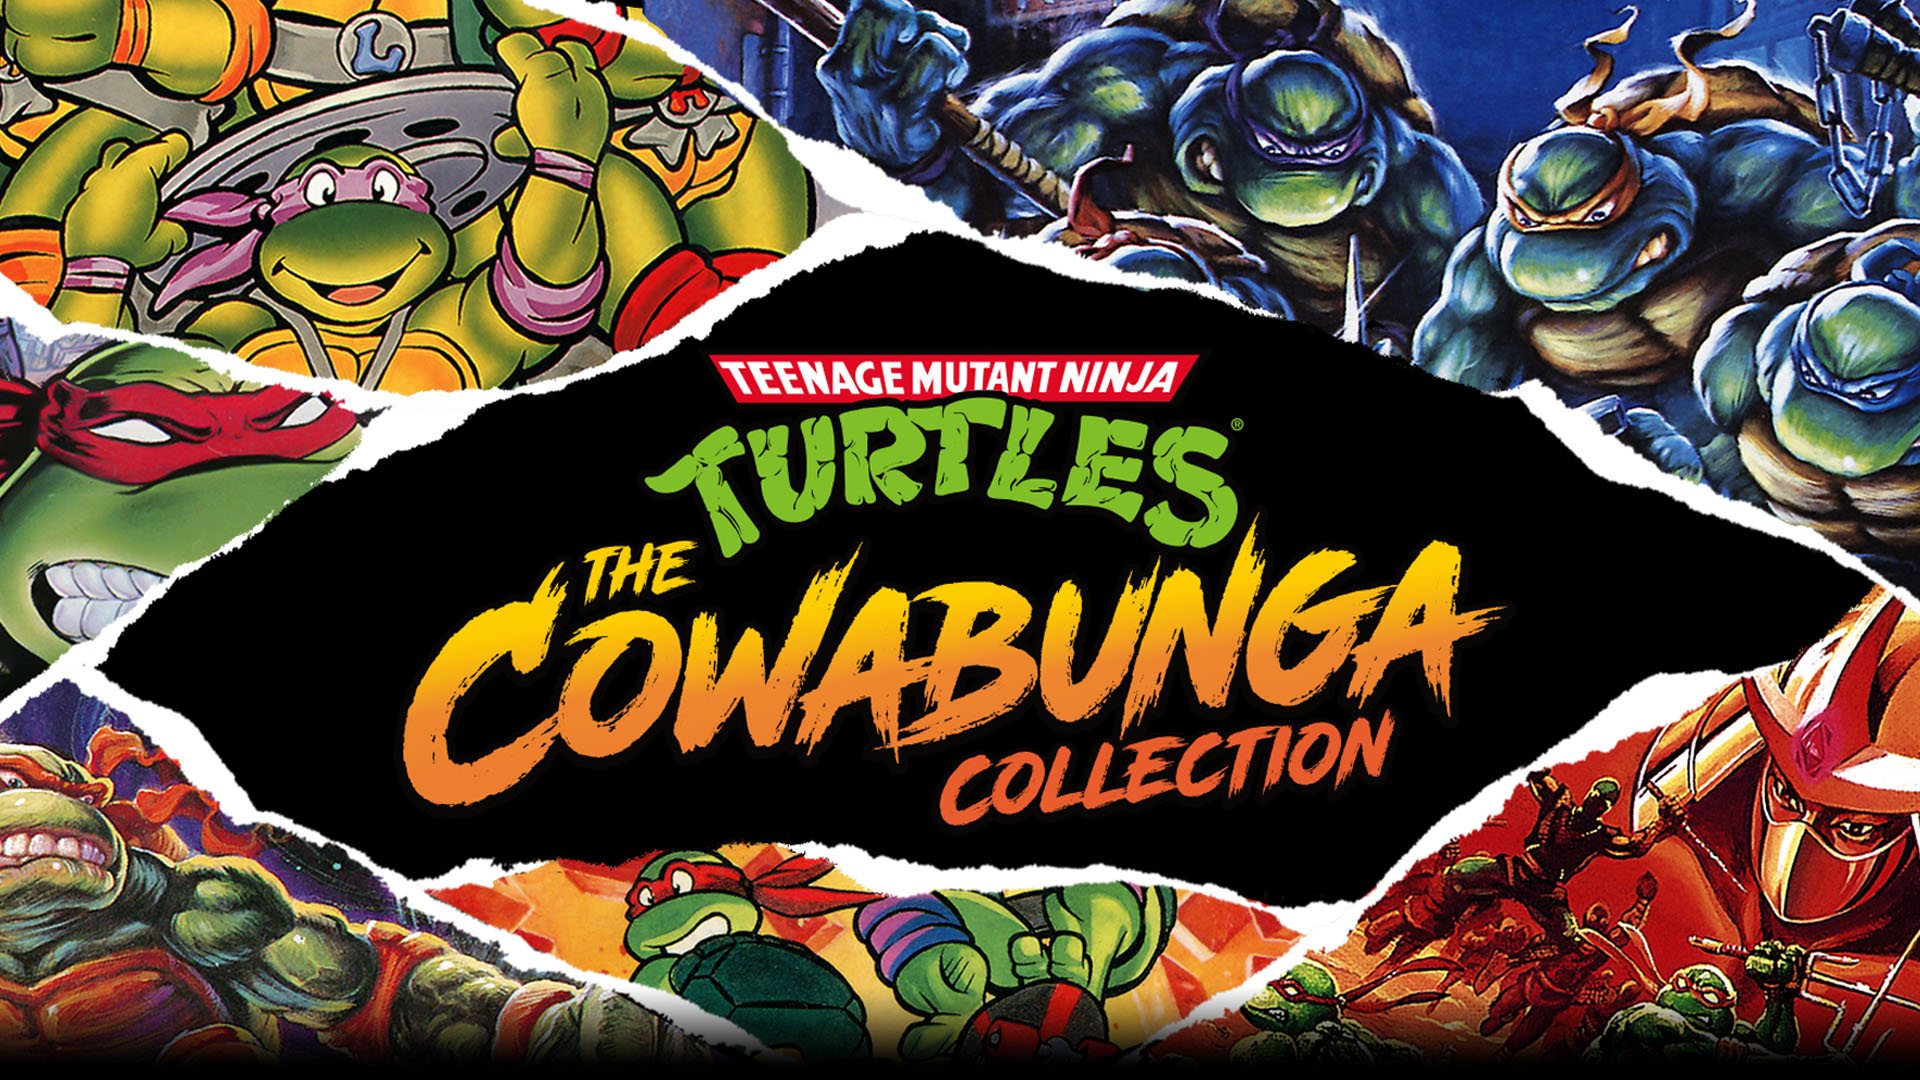 Mutant ninja turtles cowabunga collection. Черепашки ниндзя Cowabunga collection. TMNT Cowabunga collection PLAYSTATION 4. Игра teenage Mutant Ninja Turtles: the Cowabunga collection (ps4). Teenage Mutant Ninja Turtles: Cowabunga collection Nintendo Switch.